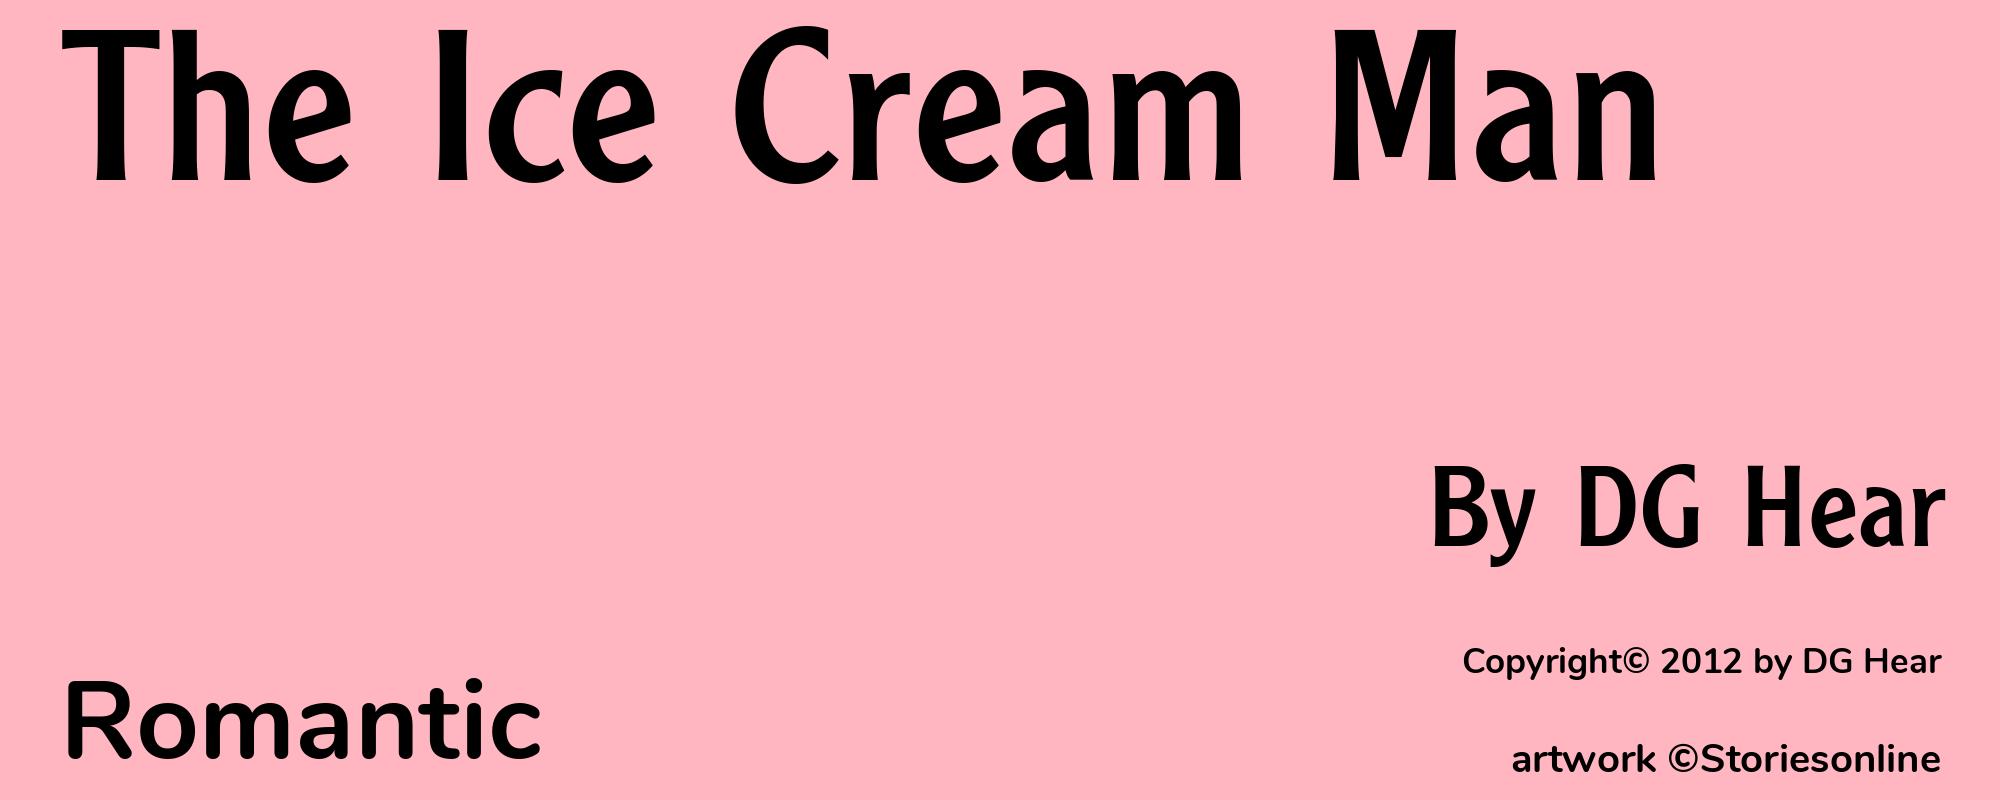 The Ice Cream Man - Cover